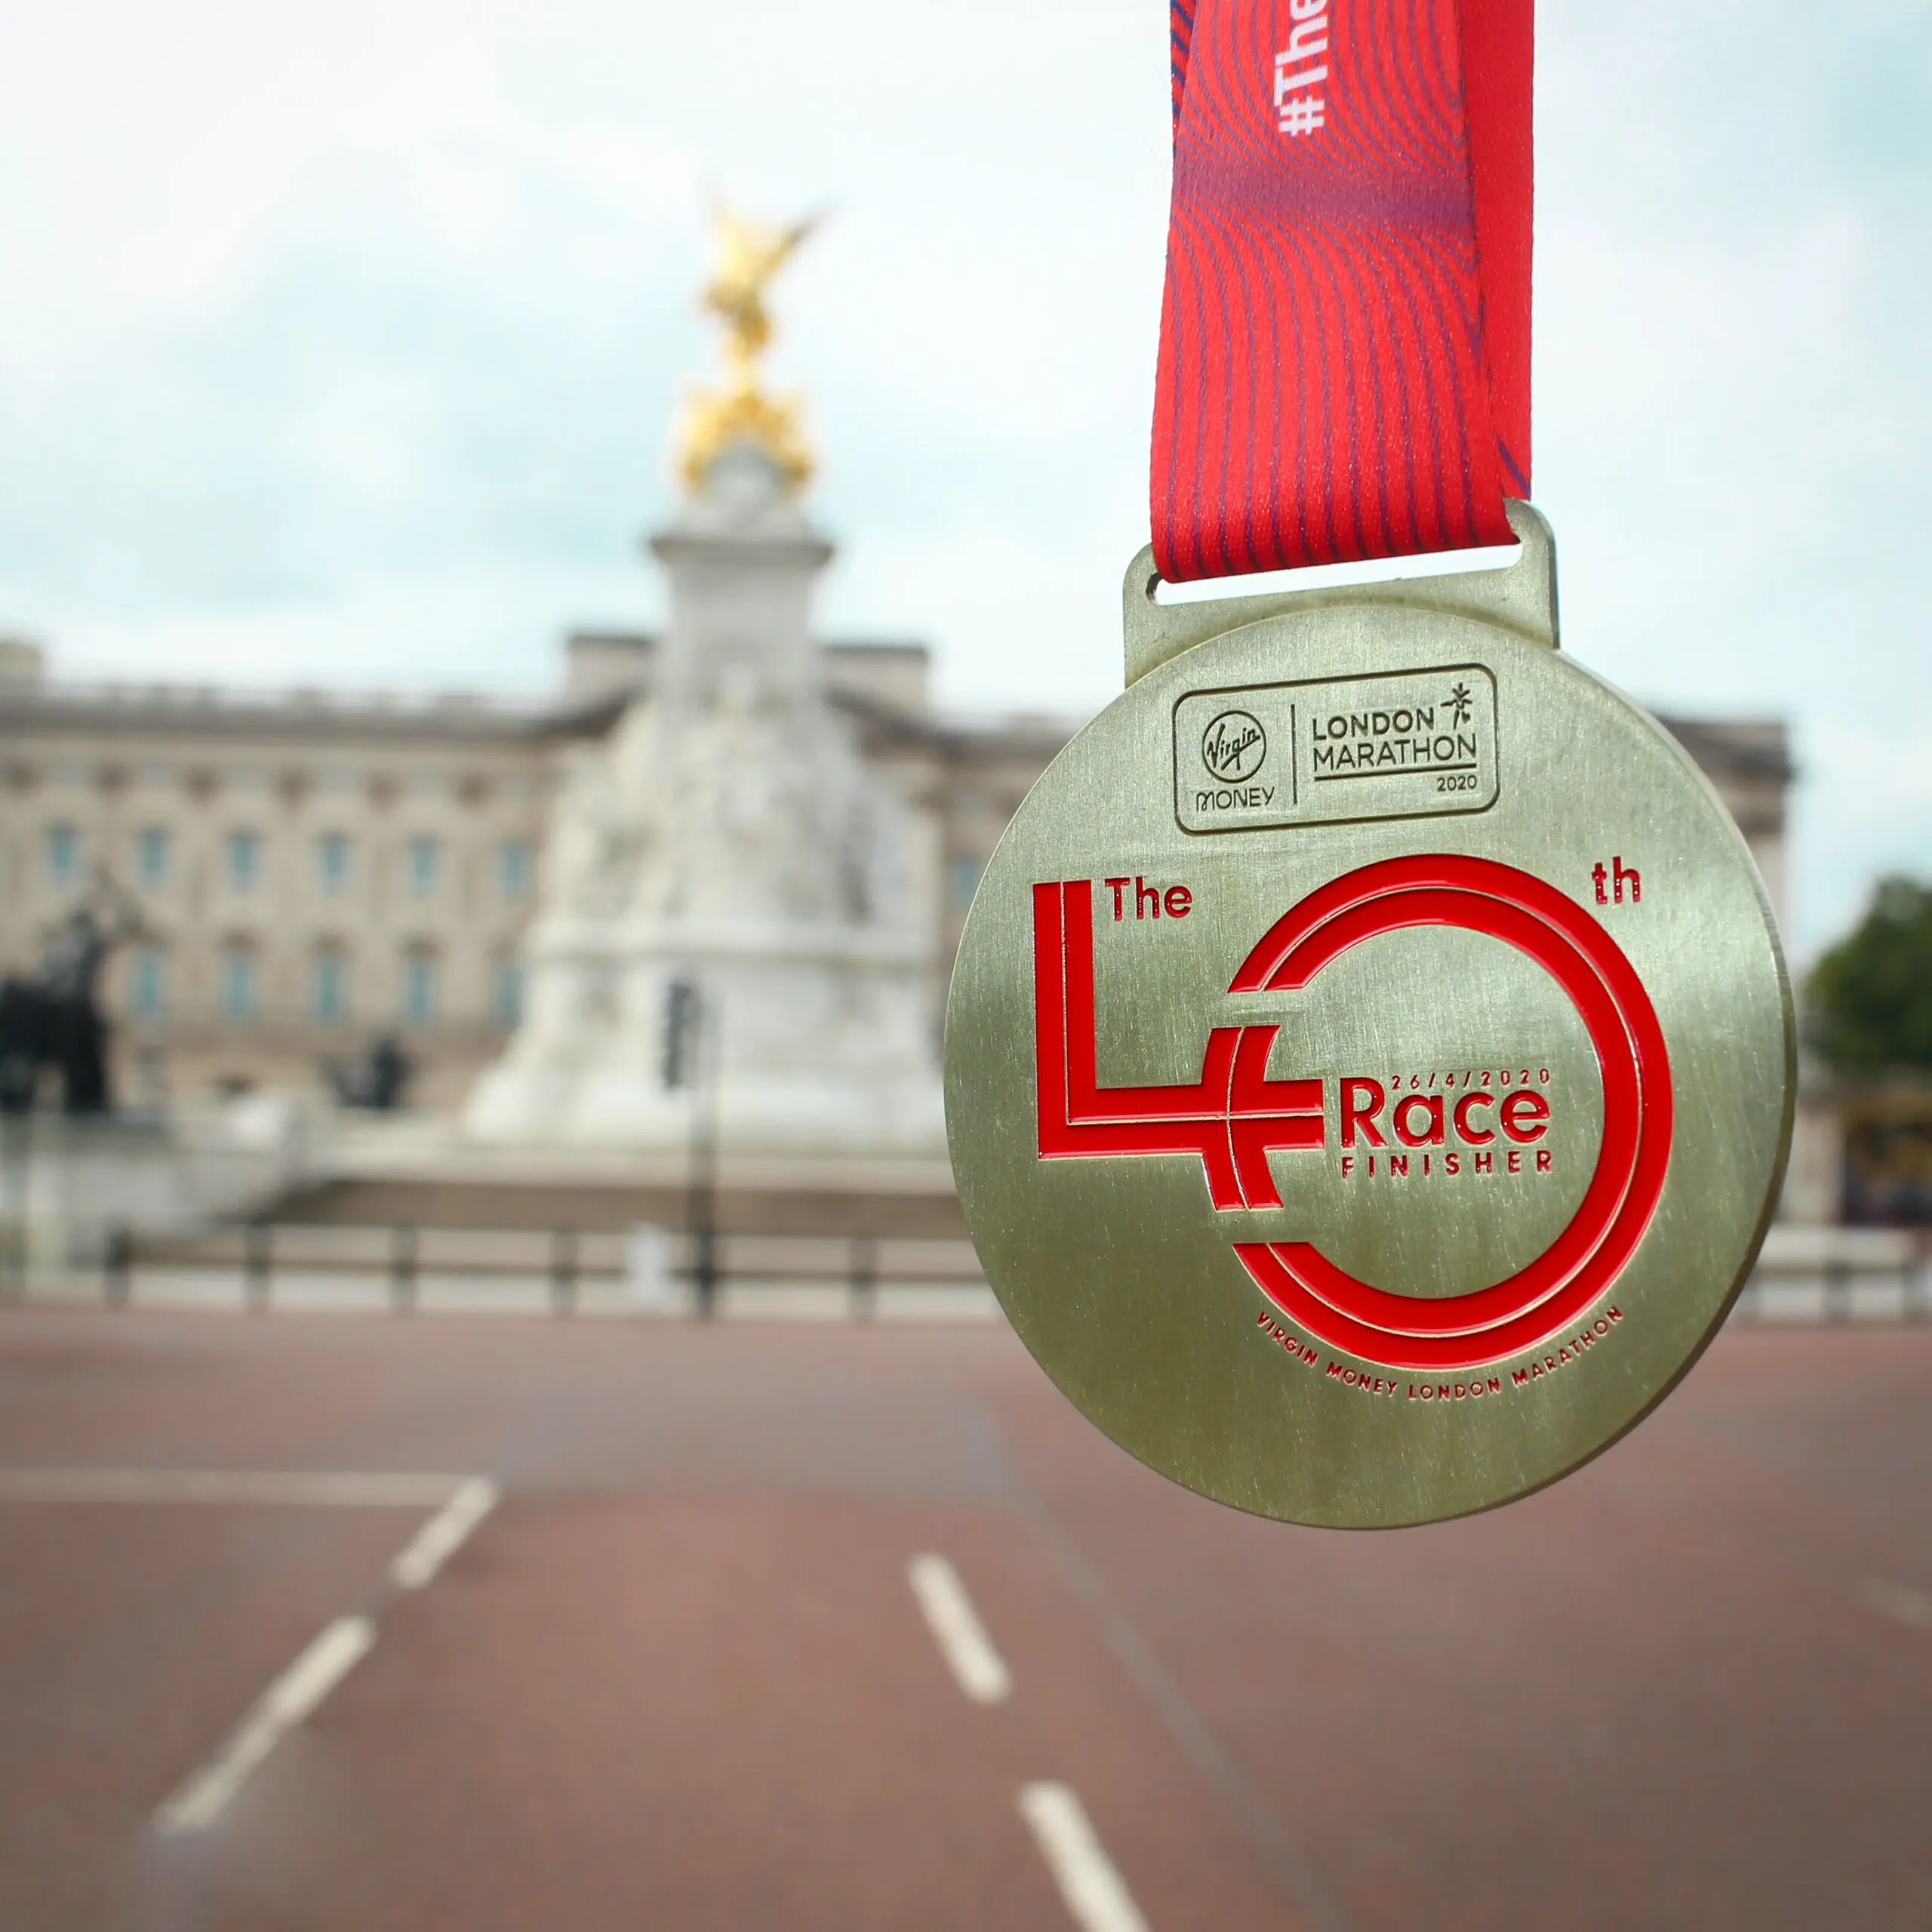 Running the virtual london marathon scaled